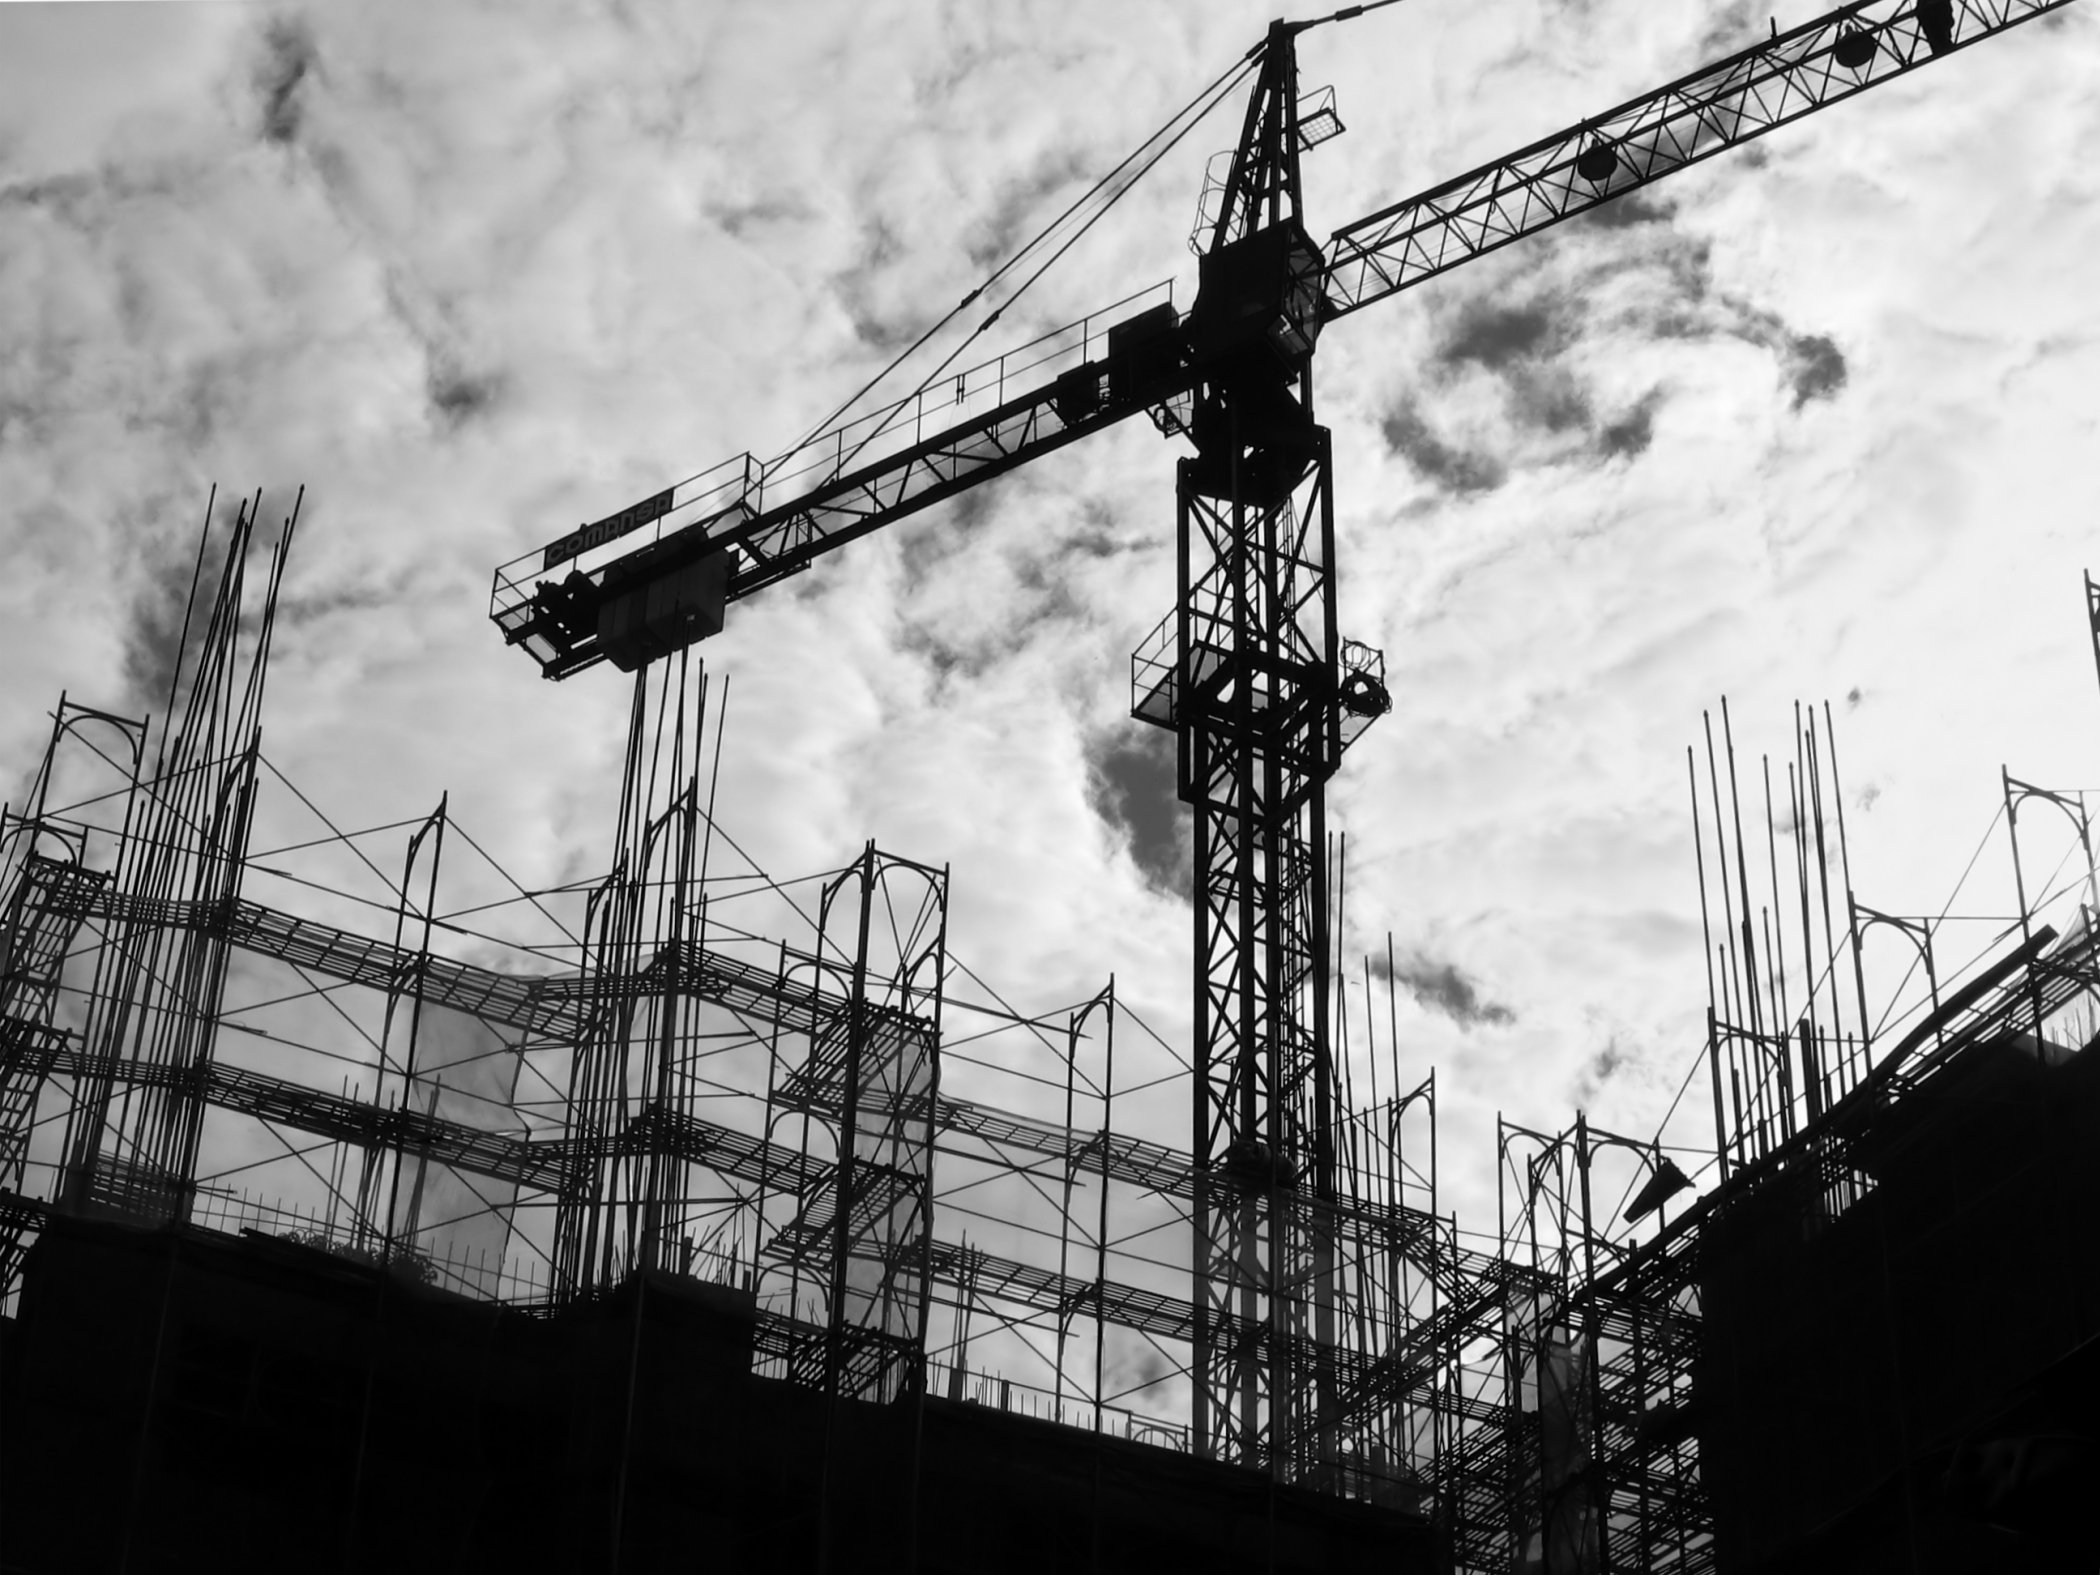 Construction Work Building Job Profession Architecture Design Crane